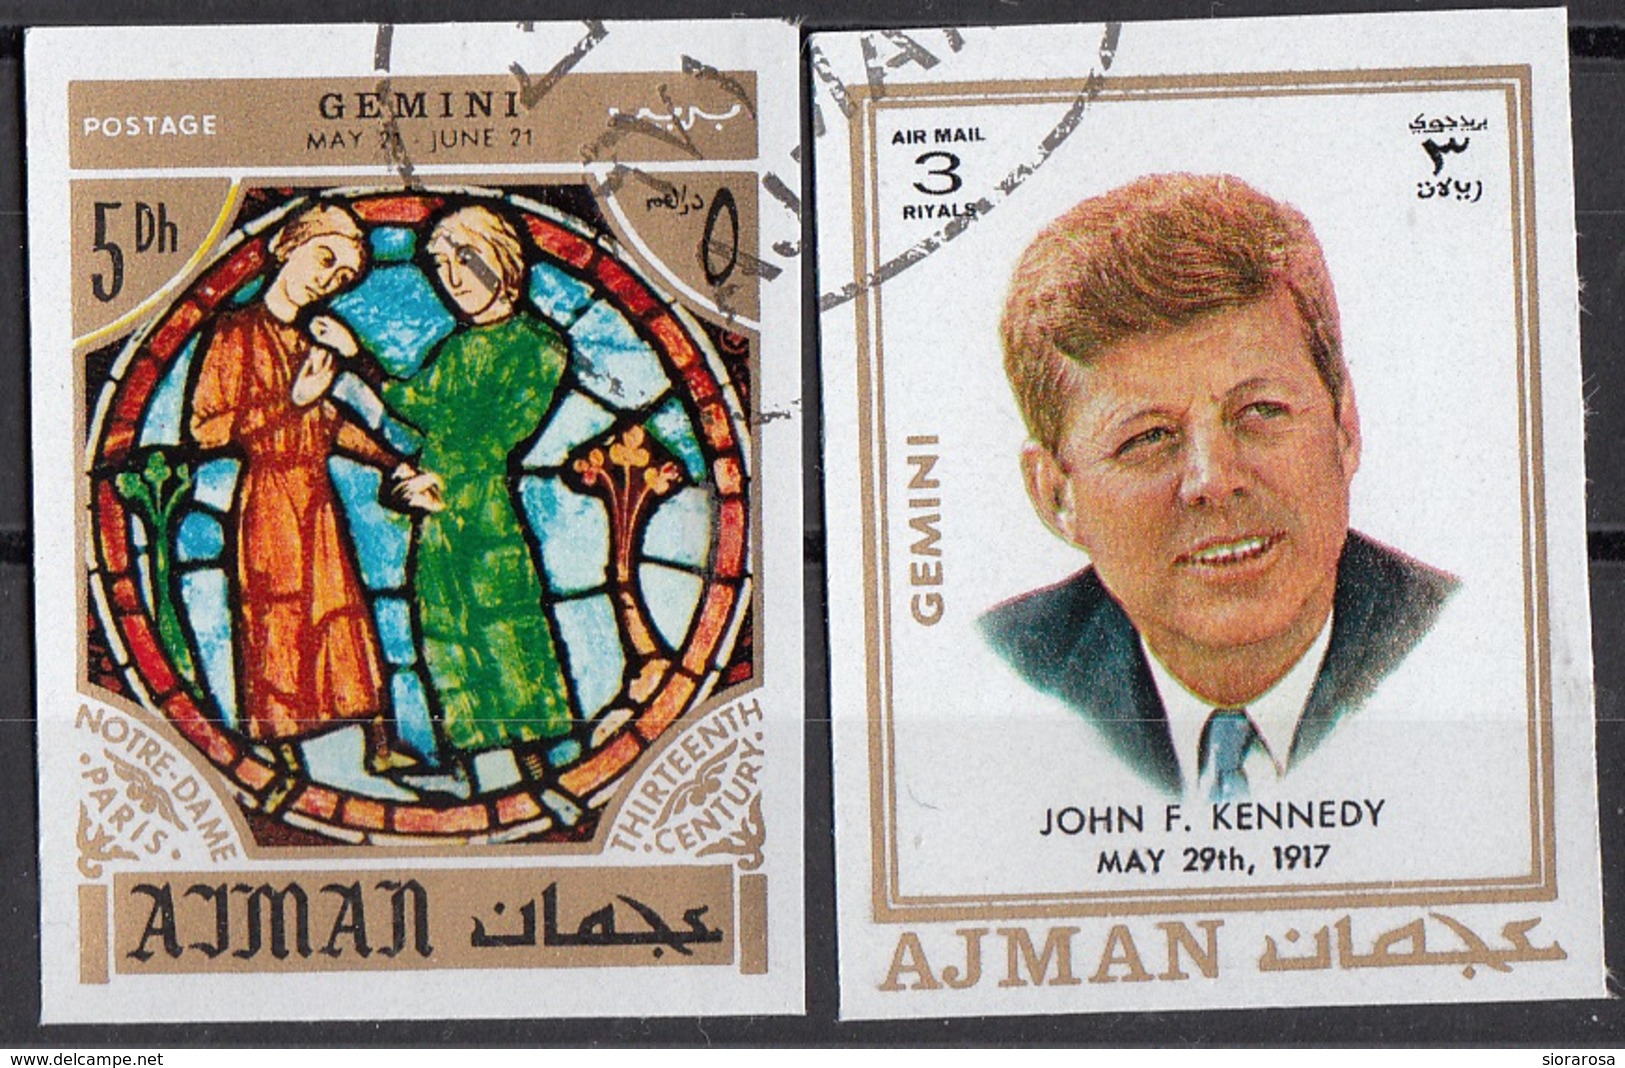 771 Ajman 1971 John F. Kennedy- Zodiaco Gemini Gemelli - Stainled Glass Window Vetrata Notre Dame - Astrologia